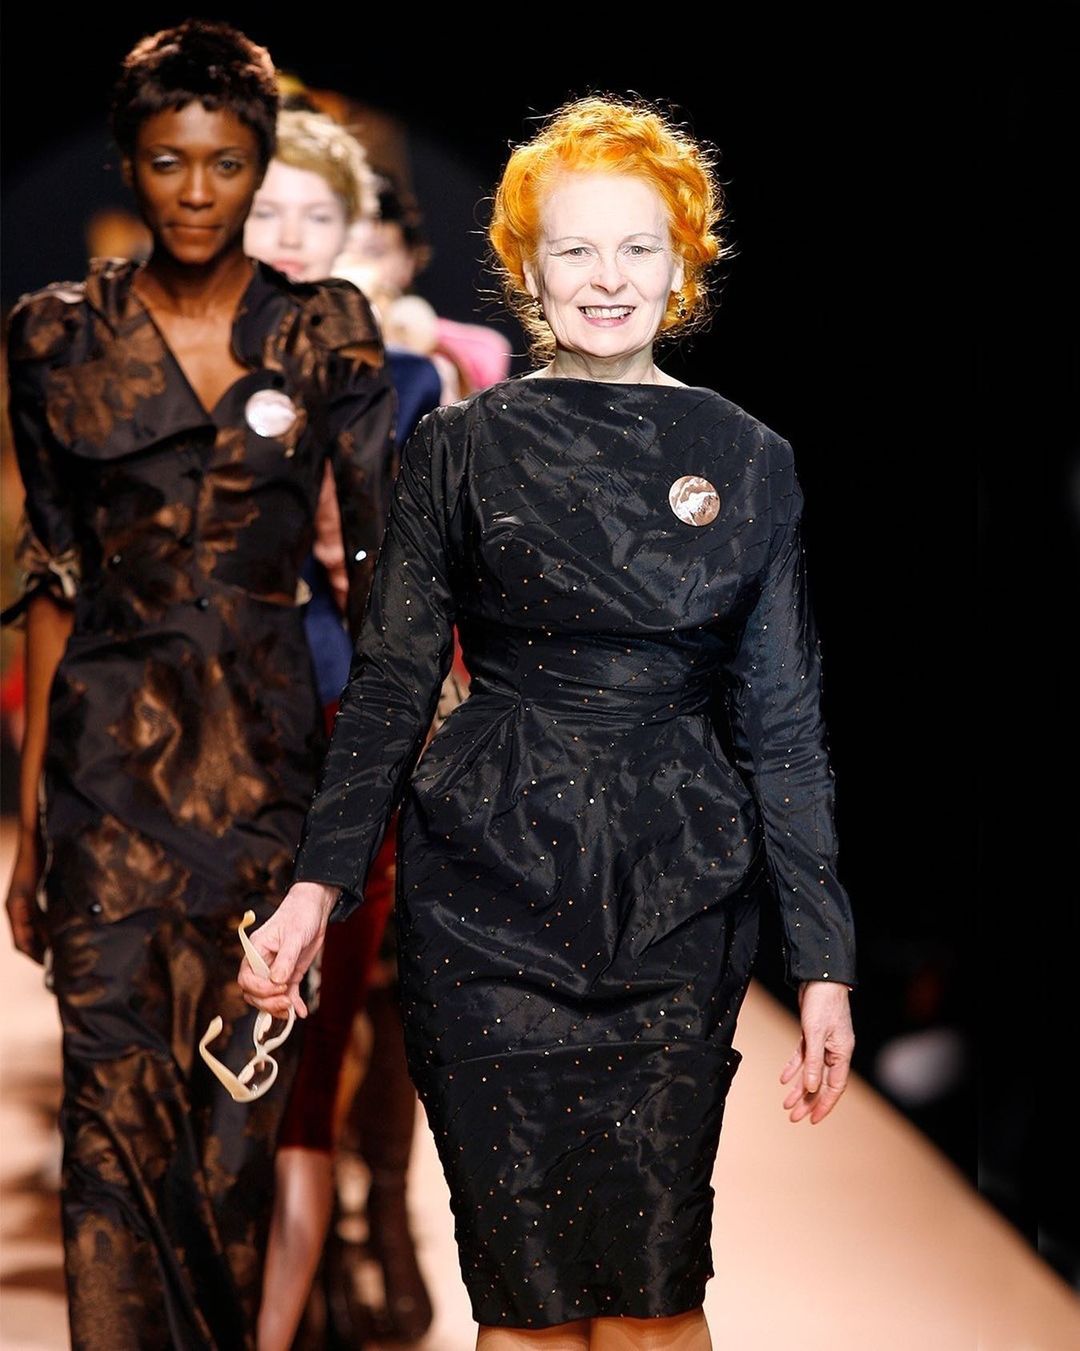 Dame Vivienne Westwood: The Fashion Designer On Climate Change